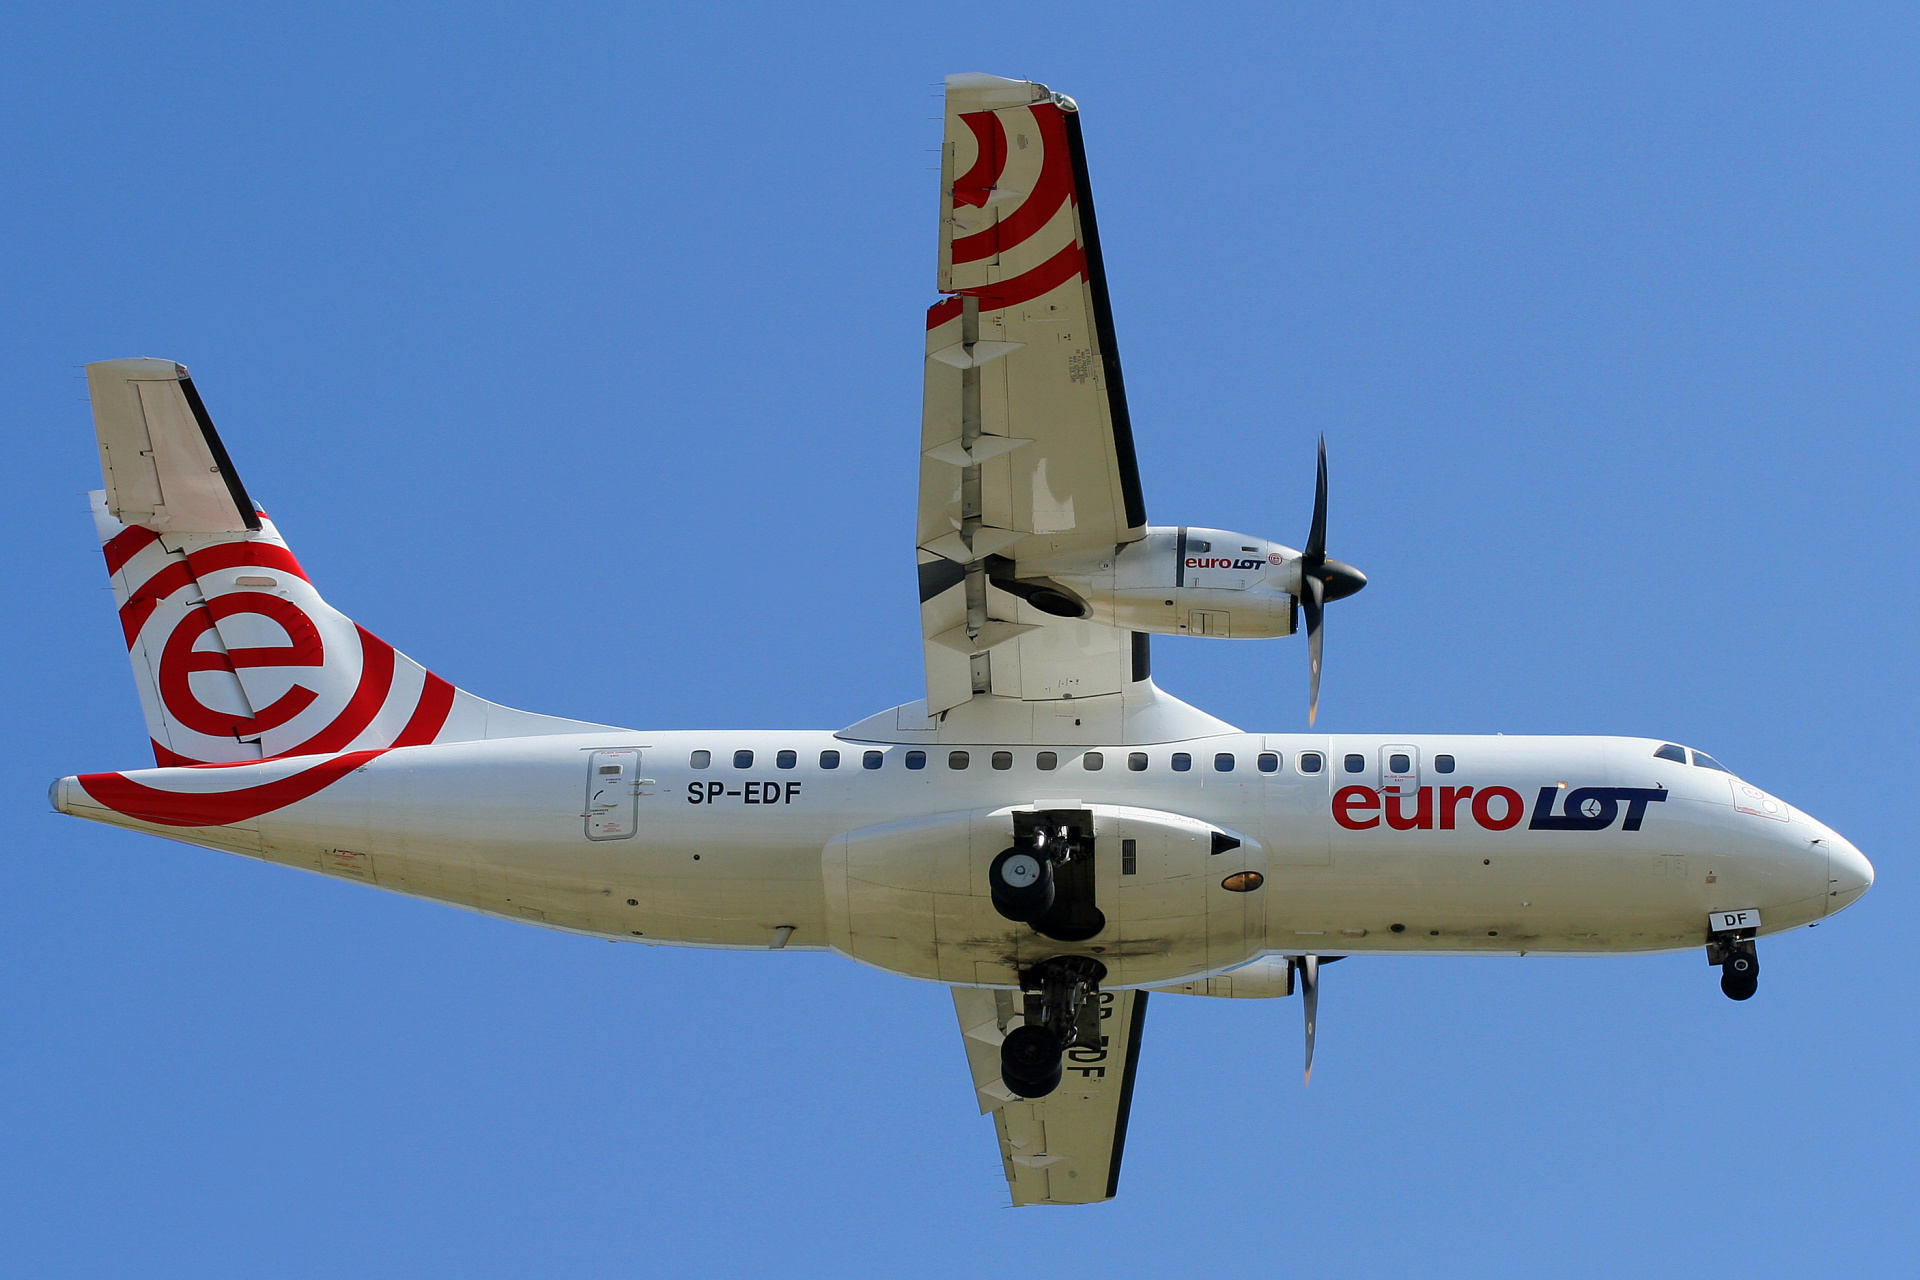 SP-EDF (Samoloty » Spotting na EPWA » ATR 42 » EuroLOT)